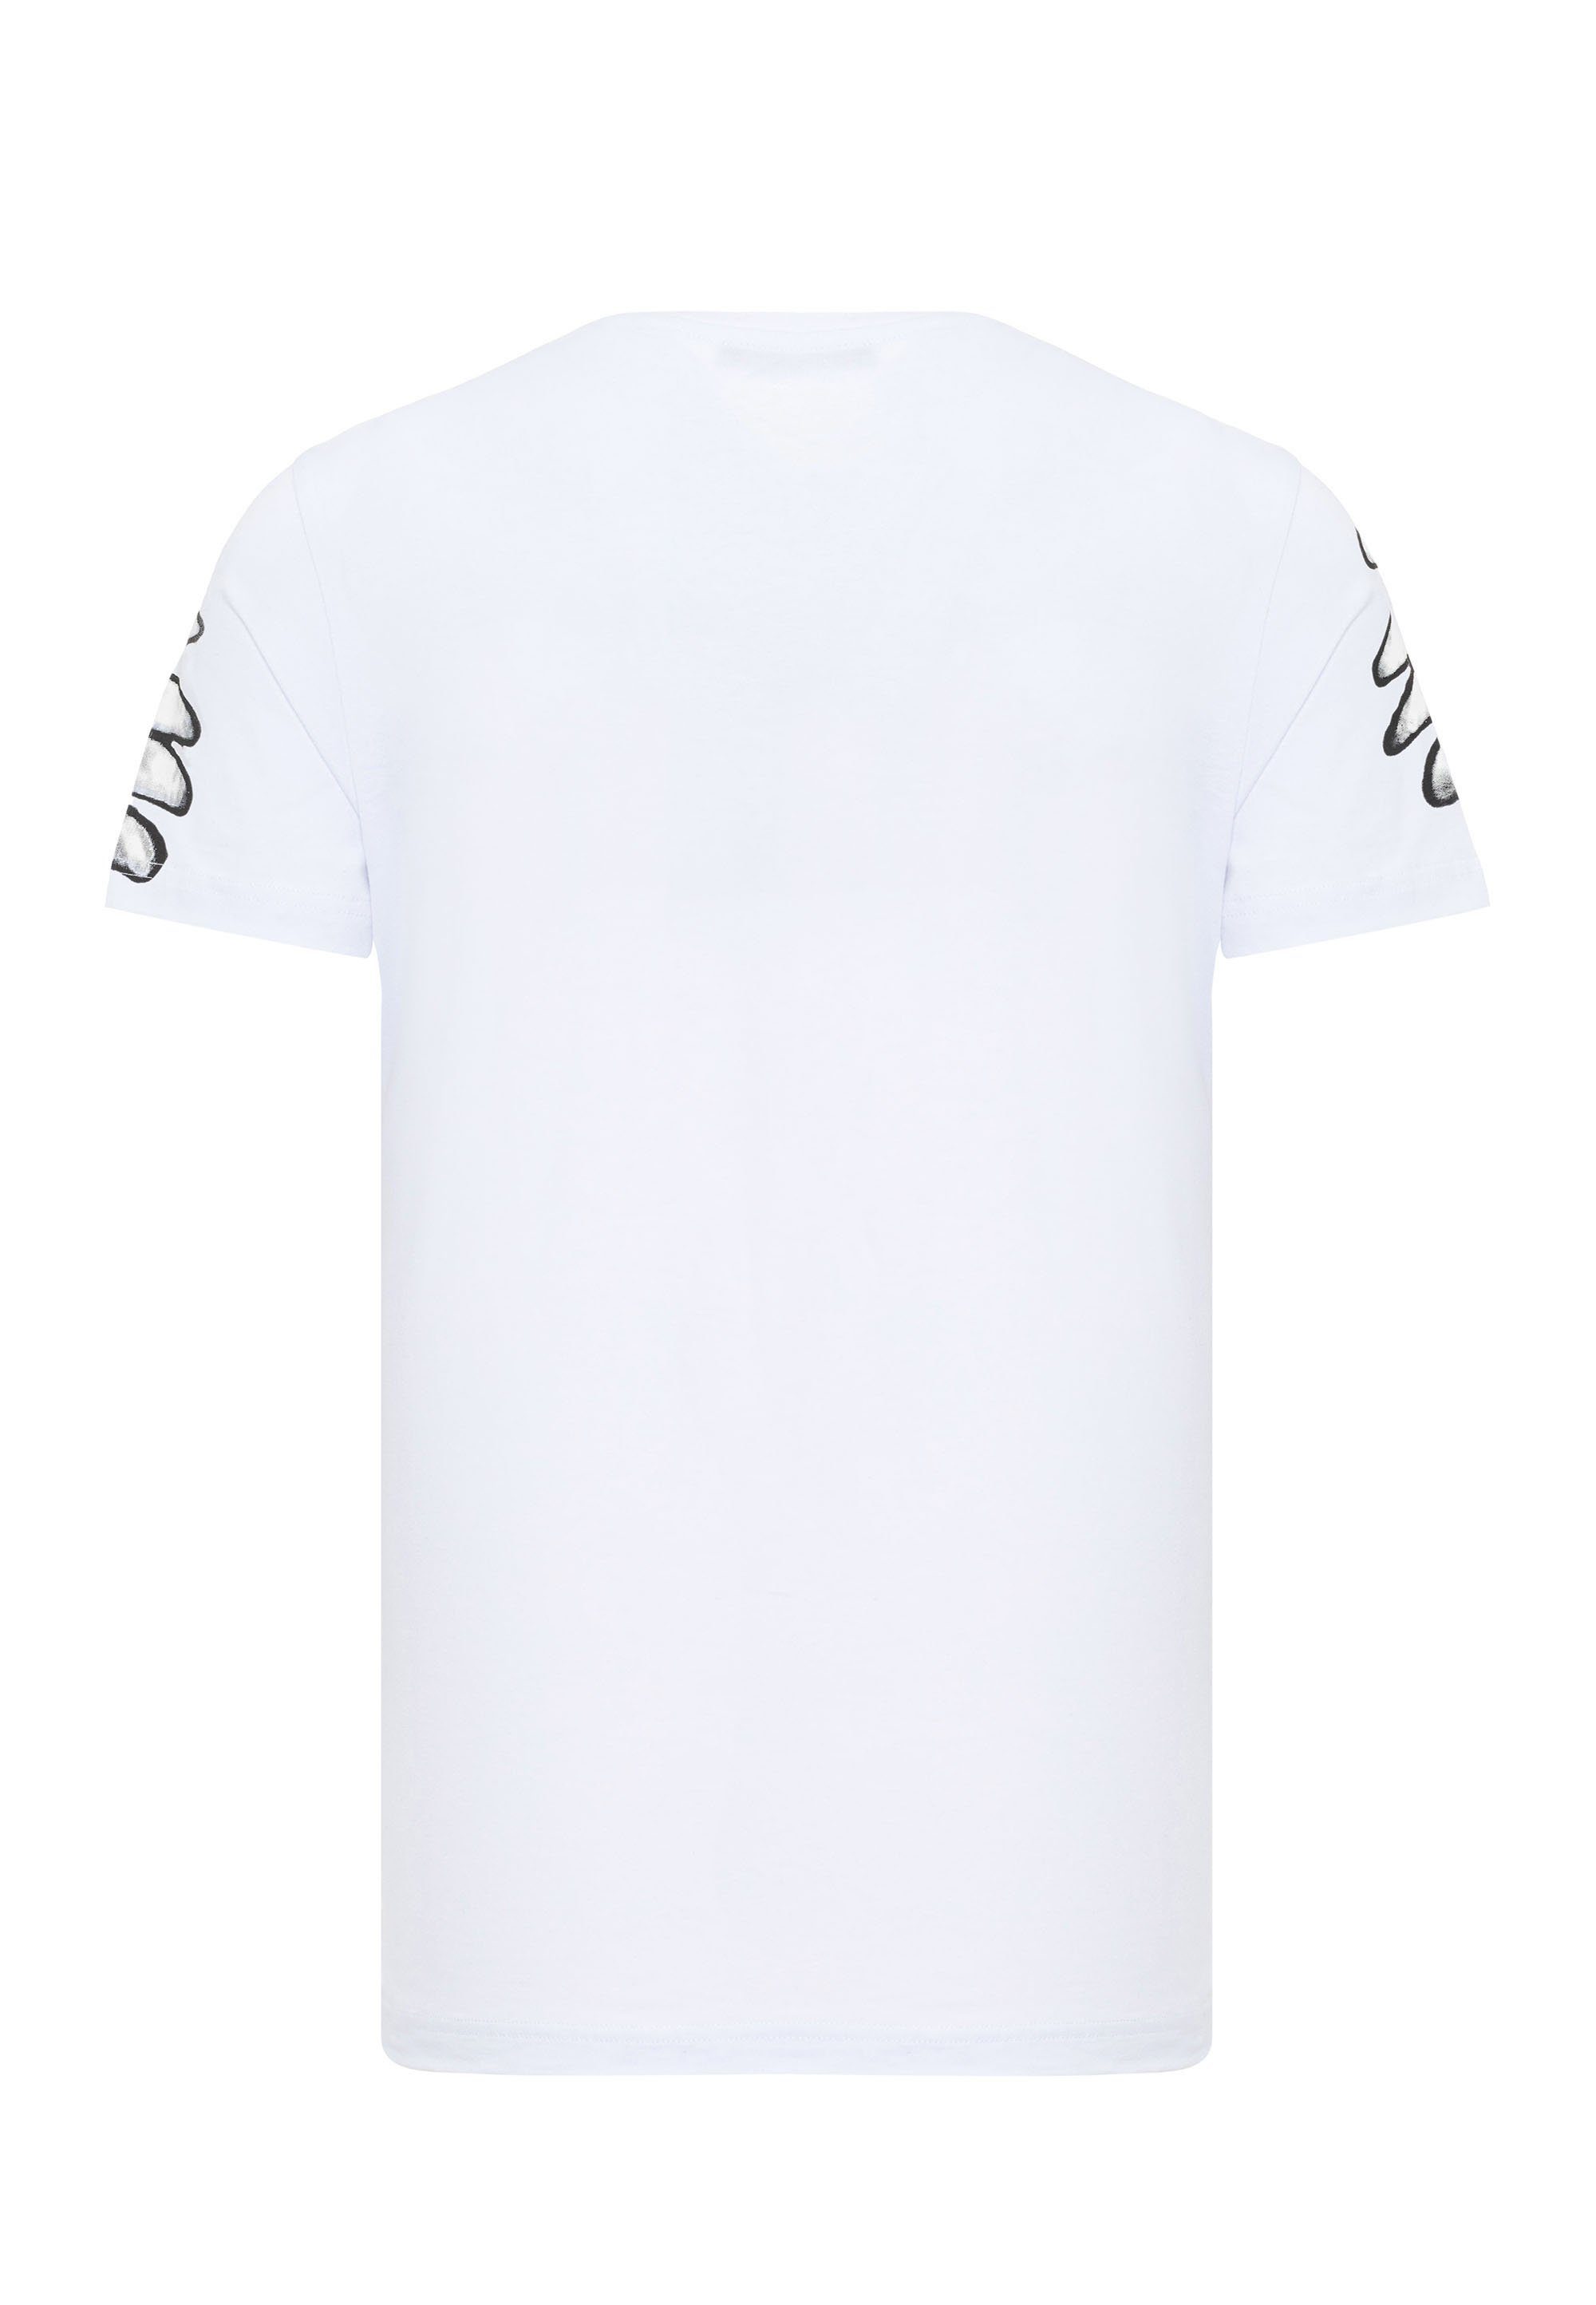 Baxx Look in weiß & Cipo rockigem T-Shirt